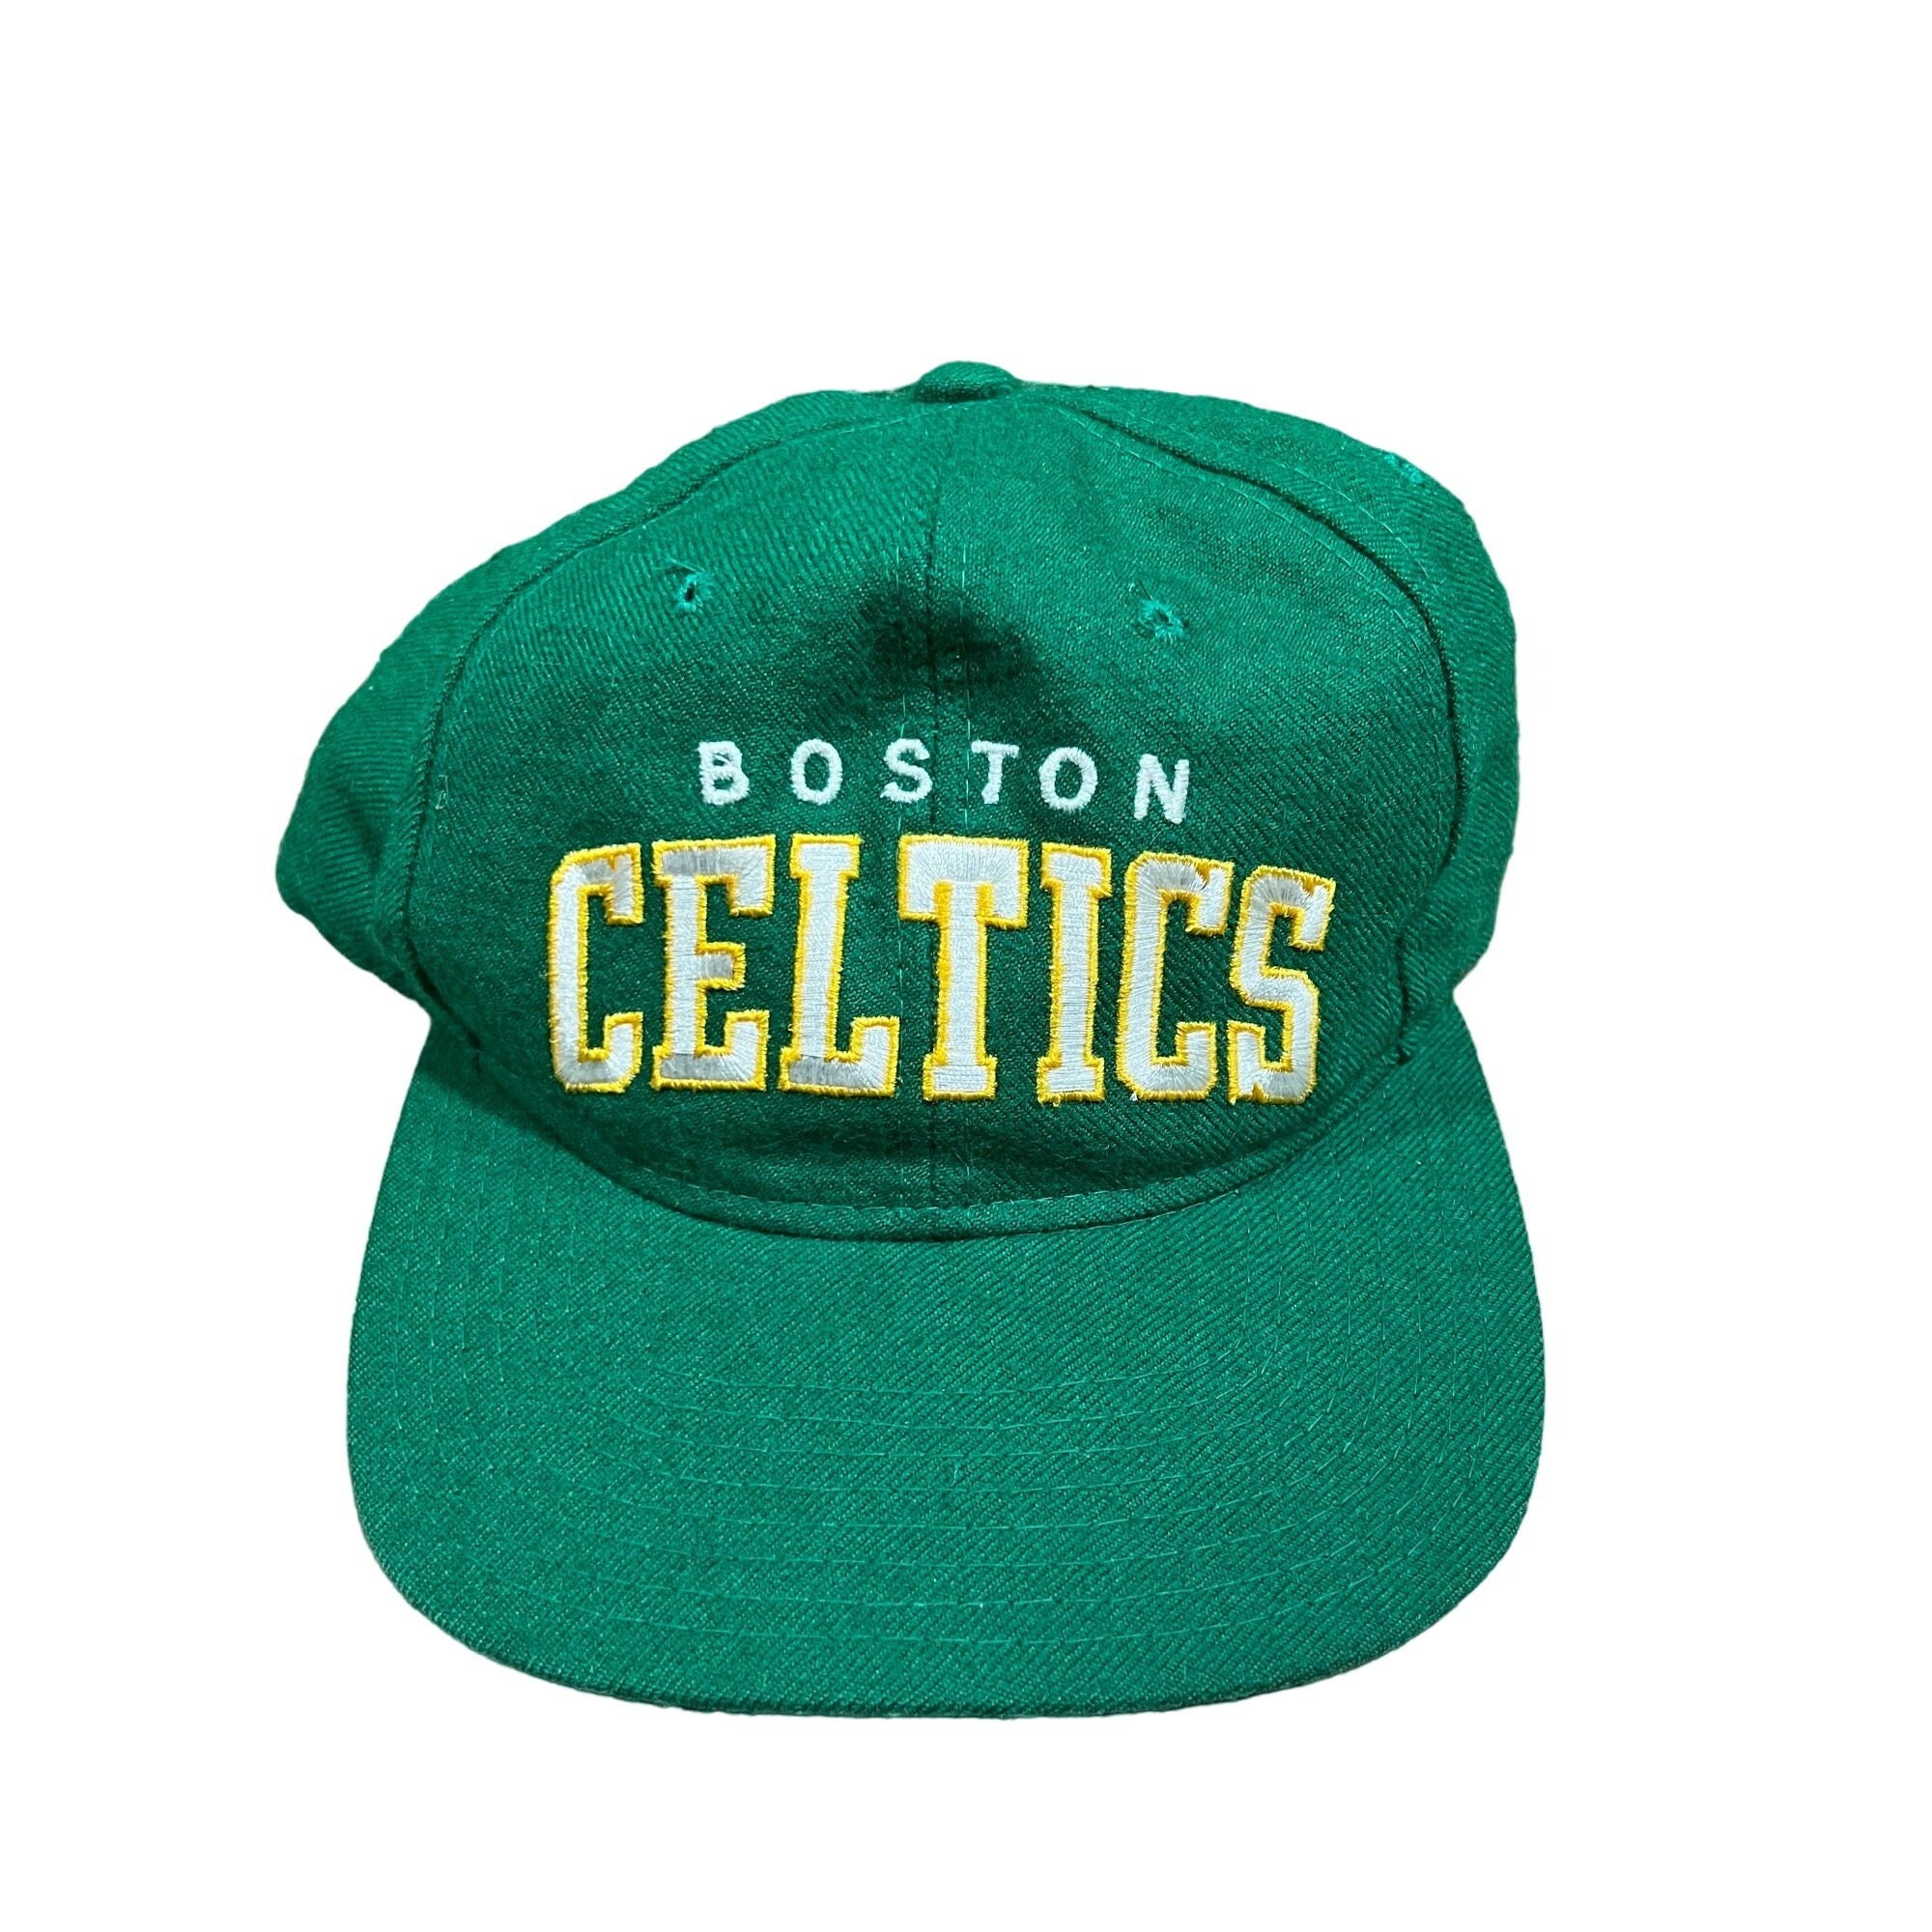 Vintage Celtics Trucker Cap by Mitchell & Ness - 22,95 €